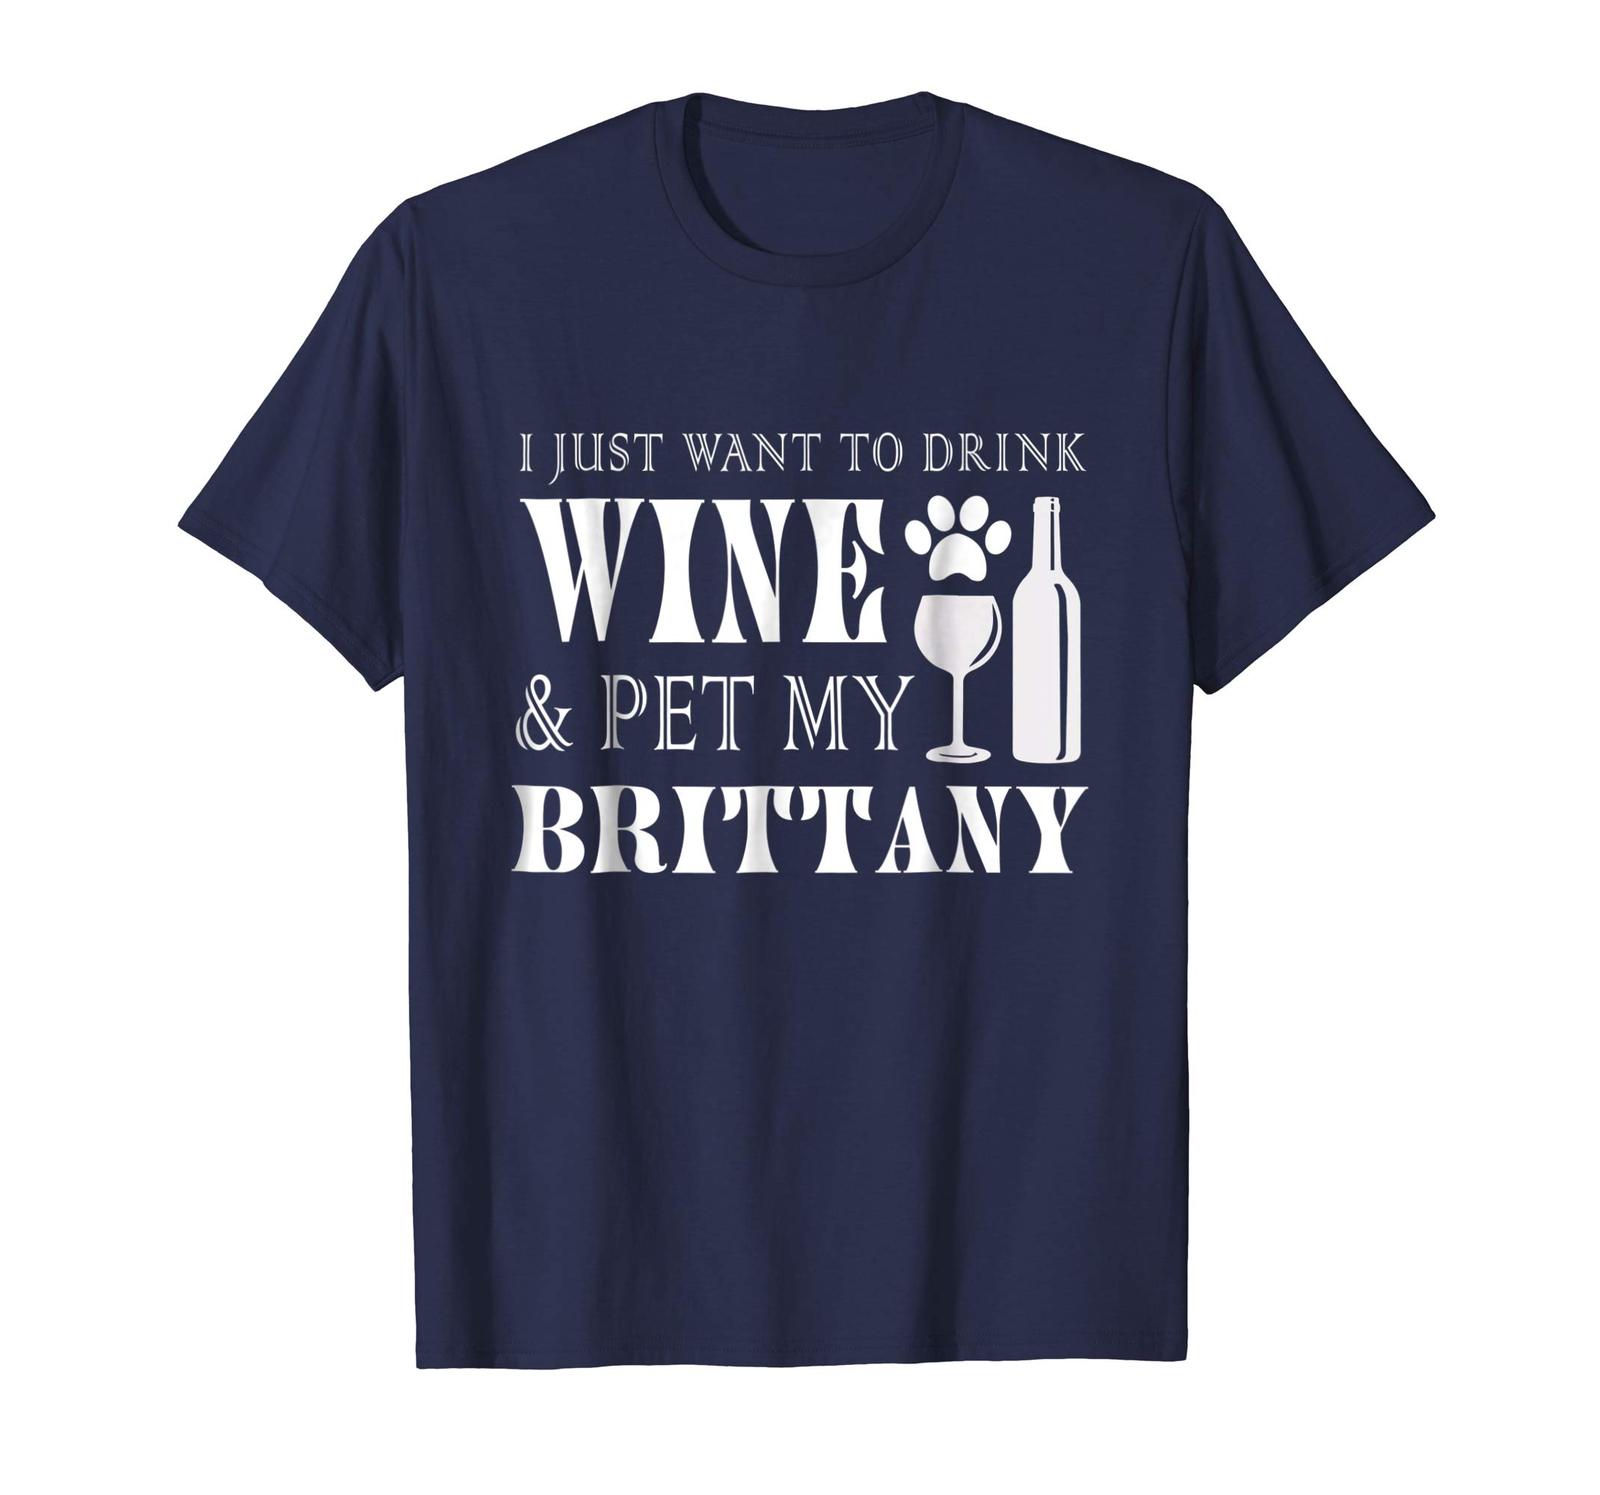 Dog Fashion - Wine and Brittany Shirt Dog Mom or Dog Dad Gift Men